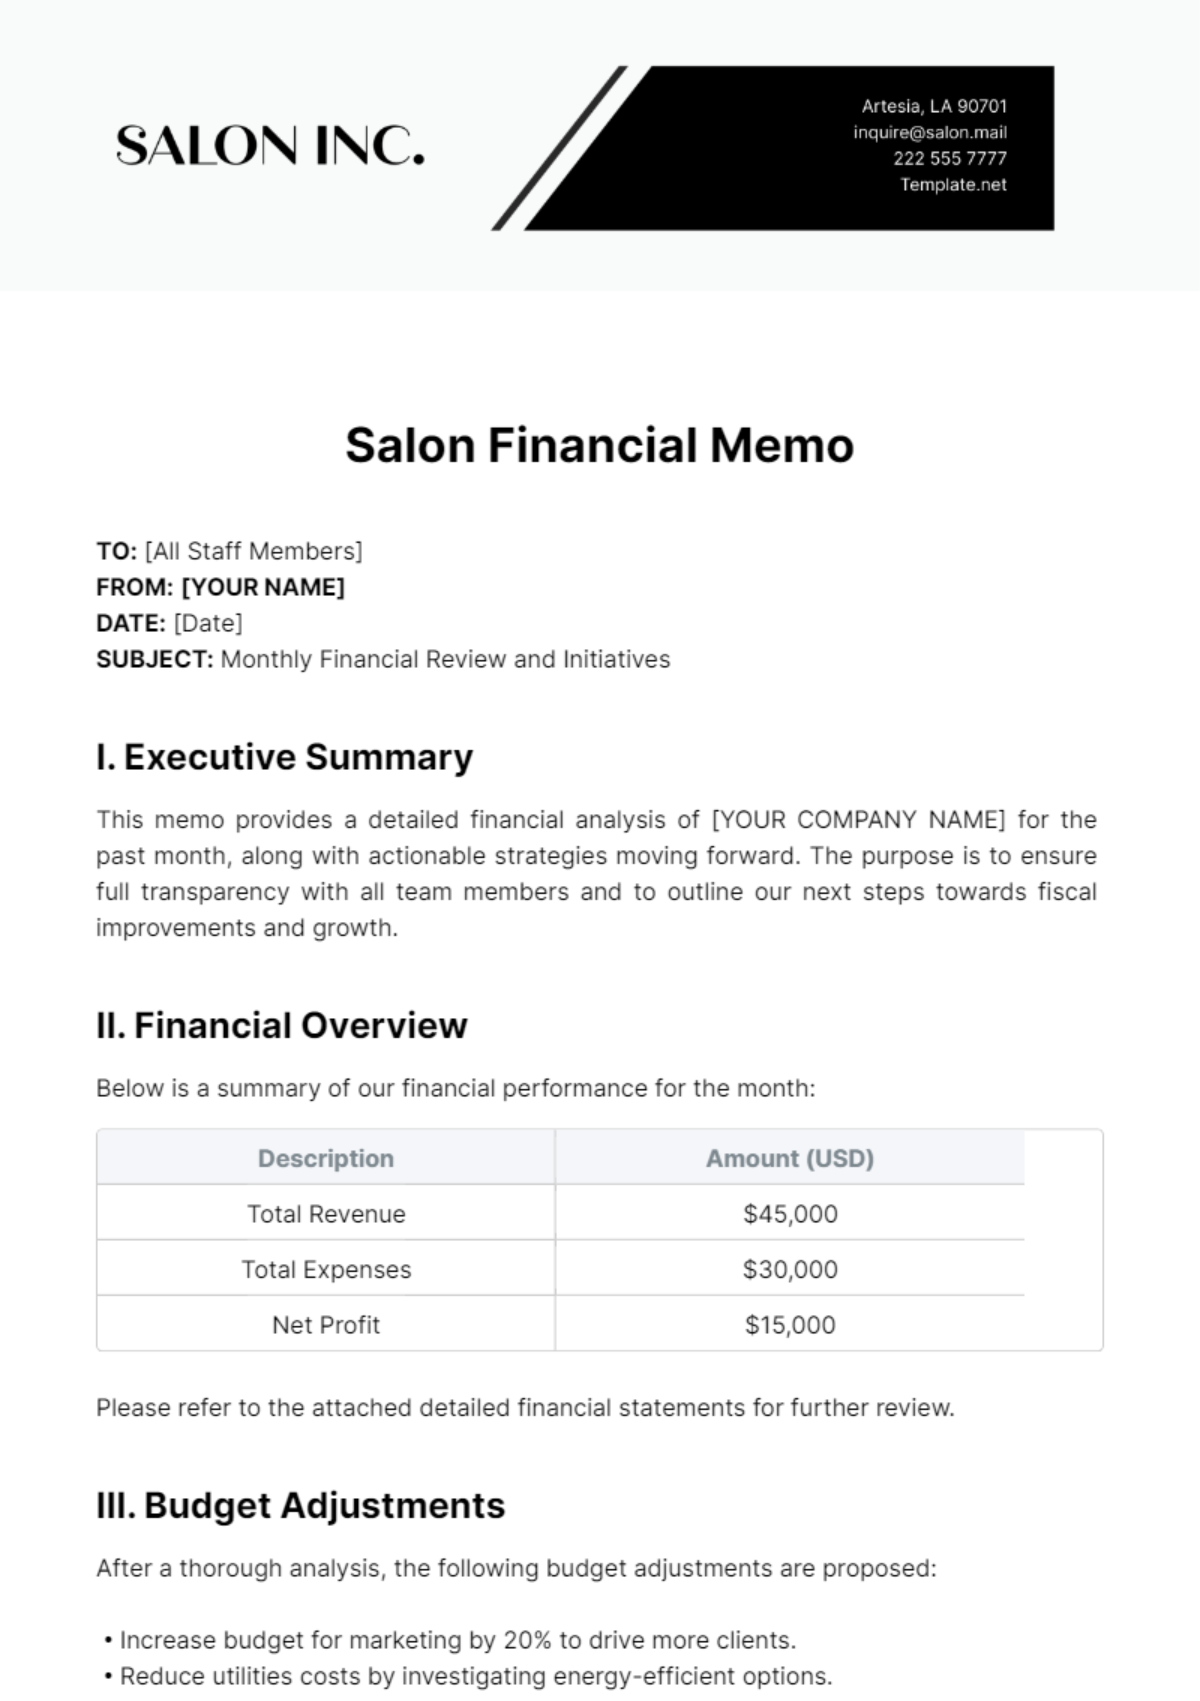 Salon Financial Memo Template